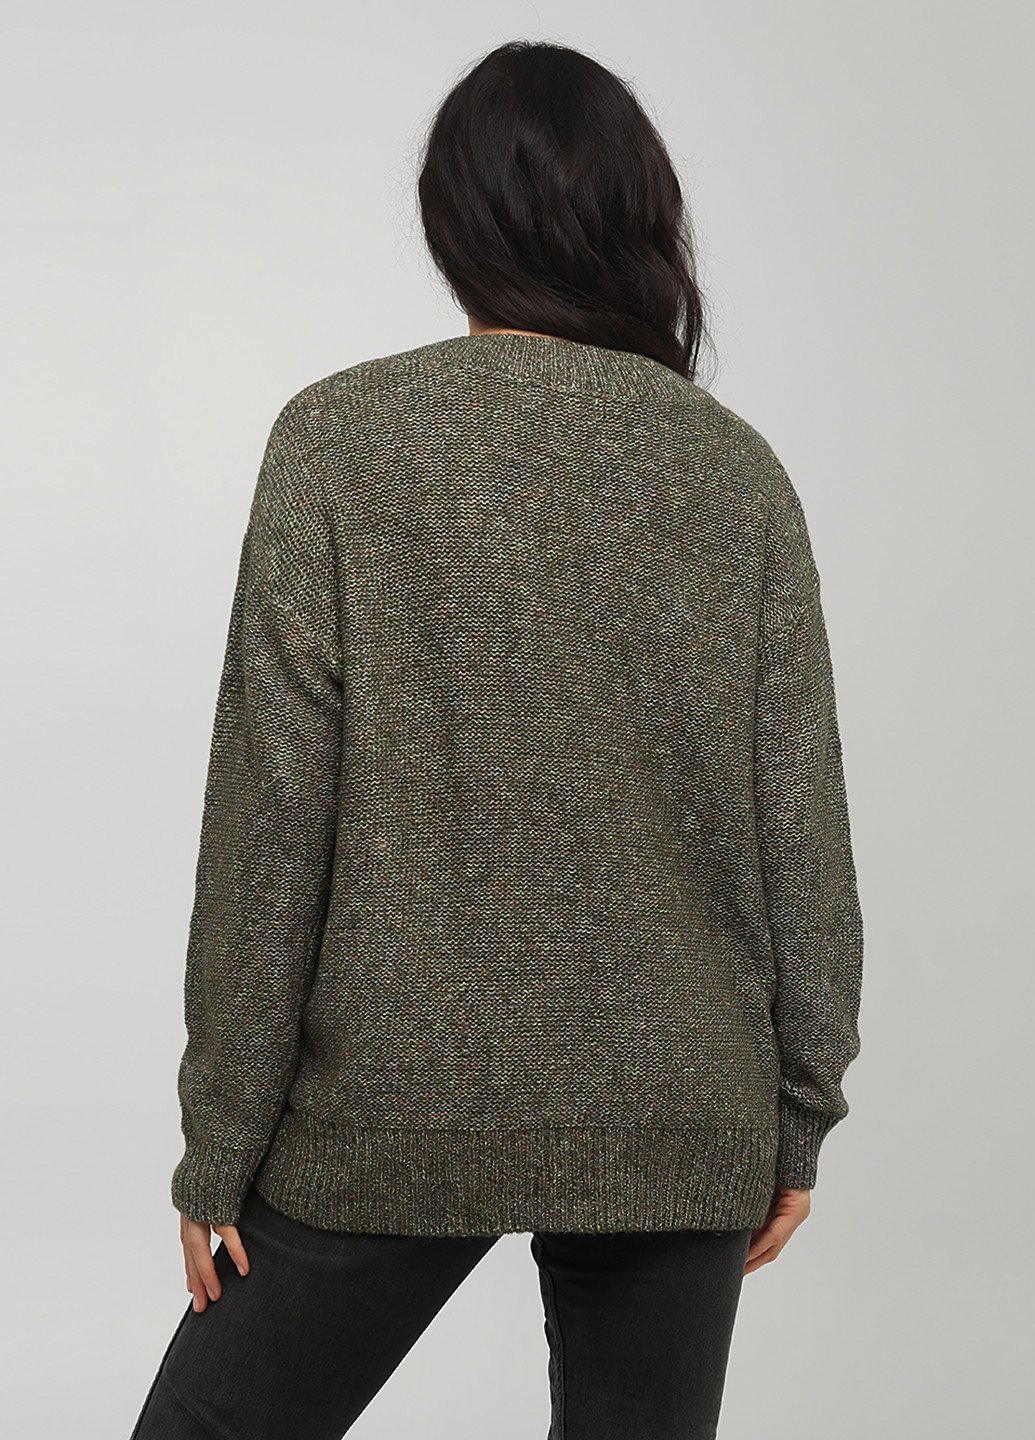 Зеленый демисезонный пуловер пуловер Old Navy